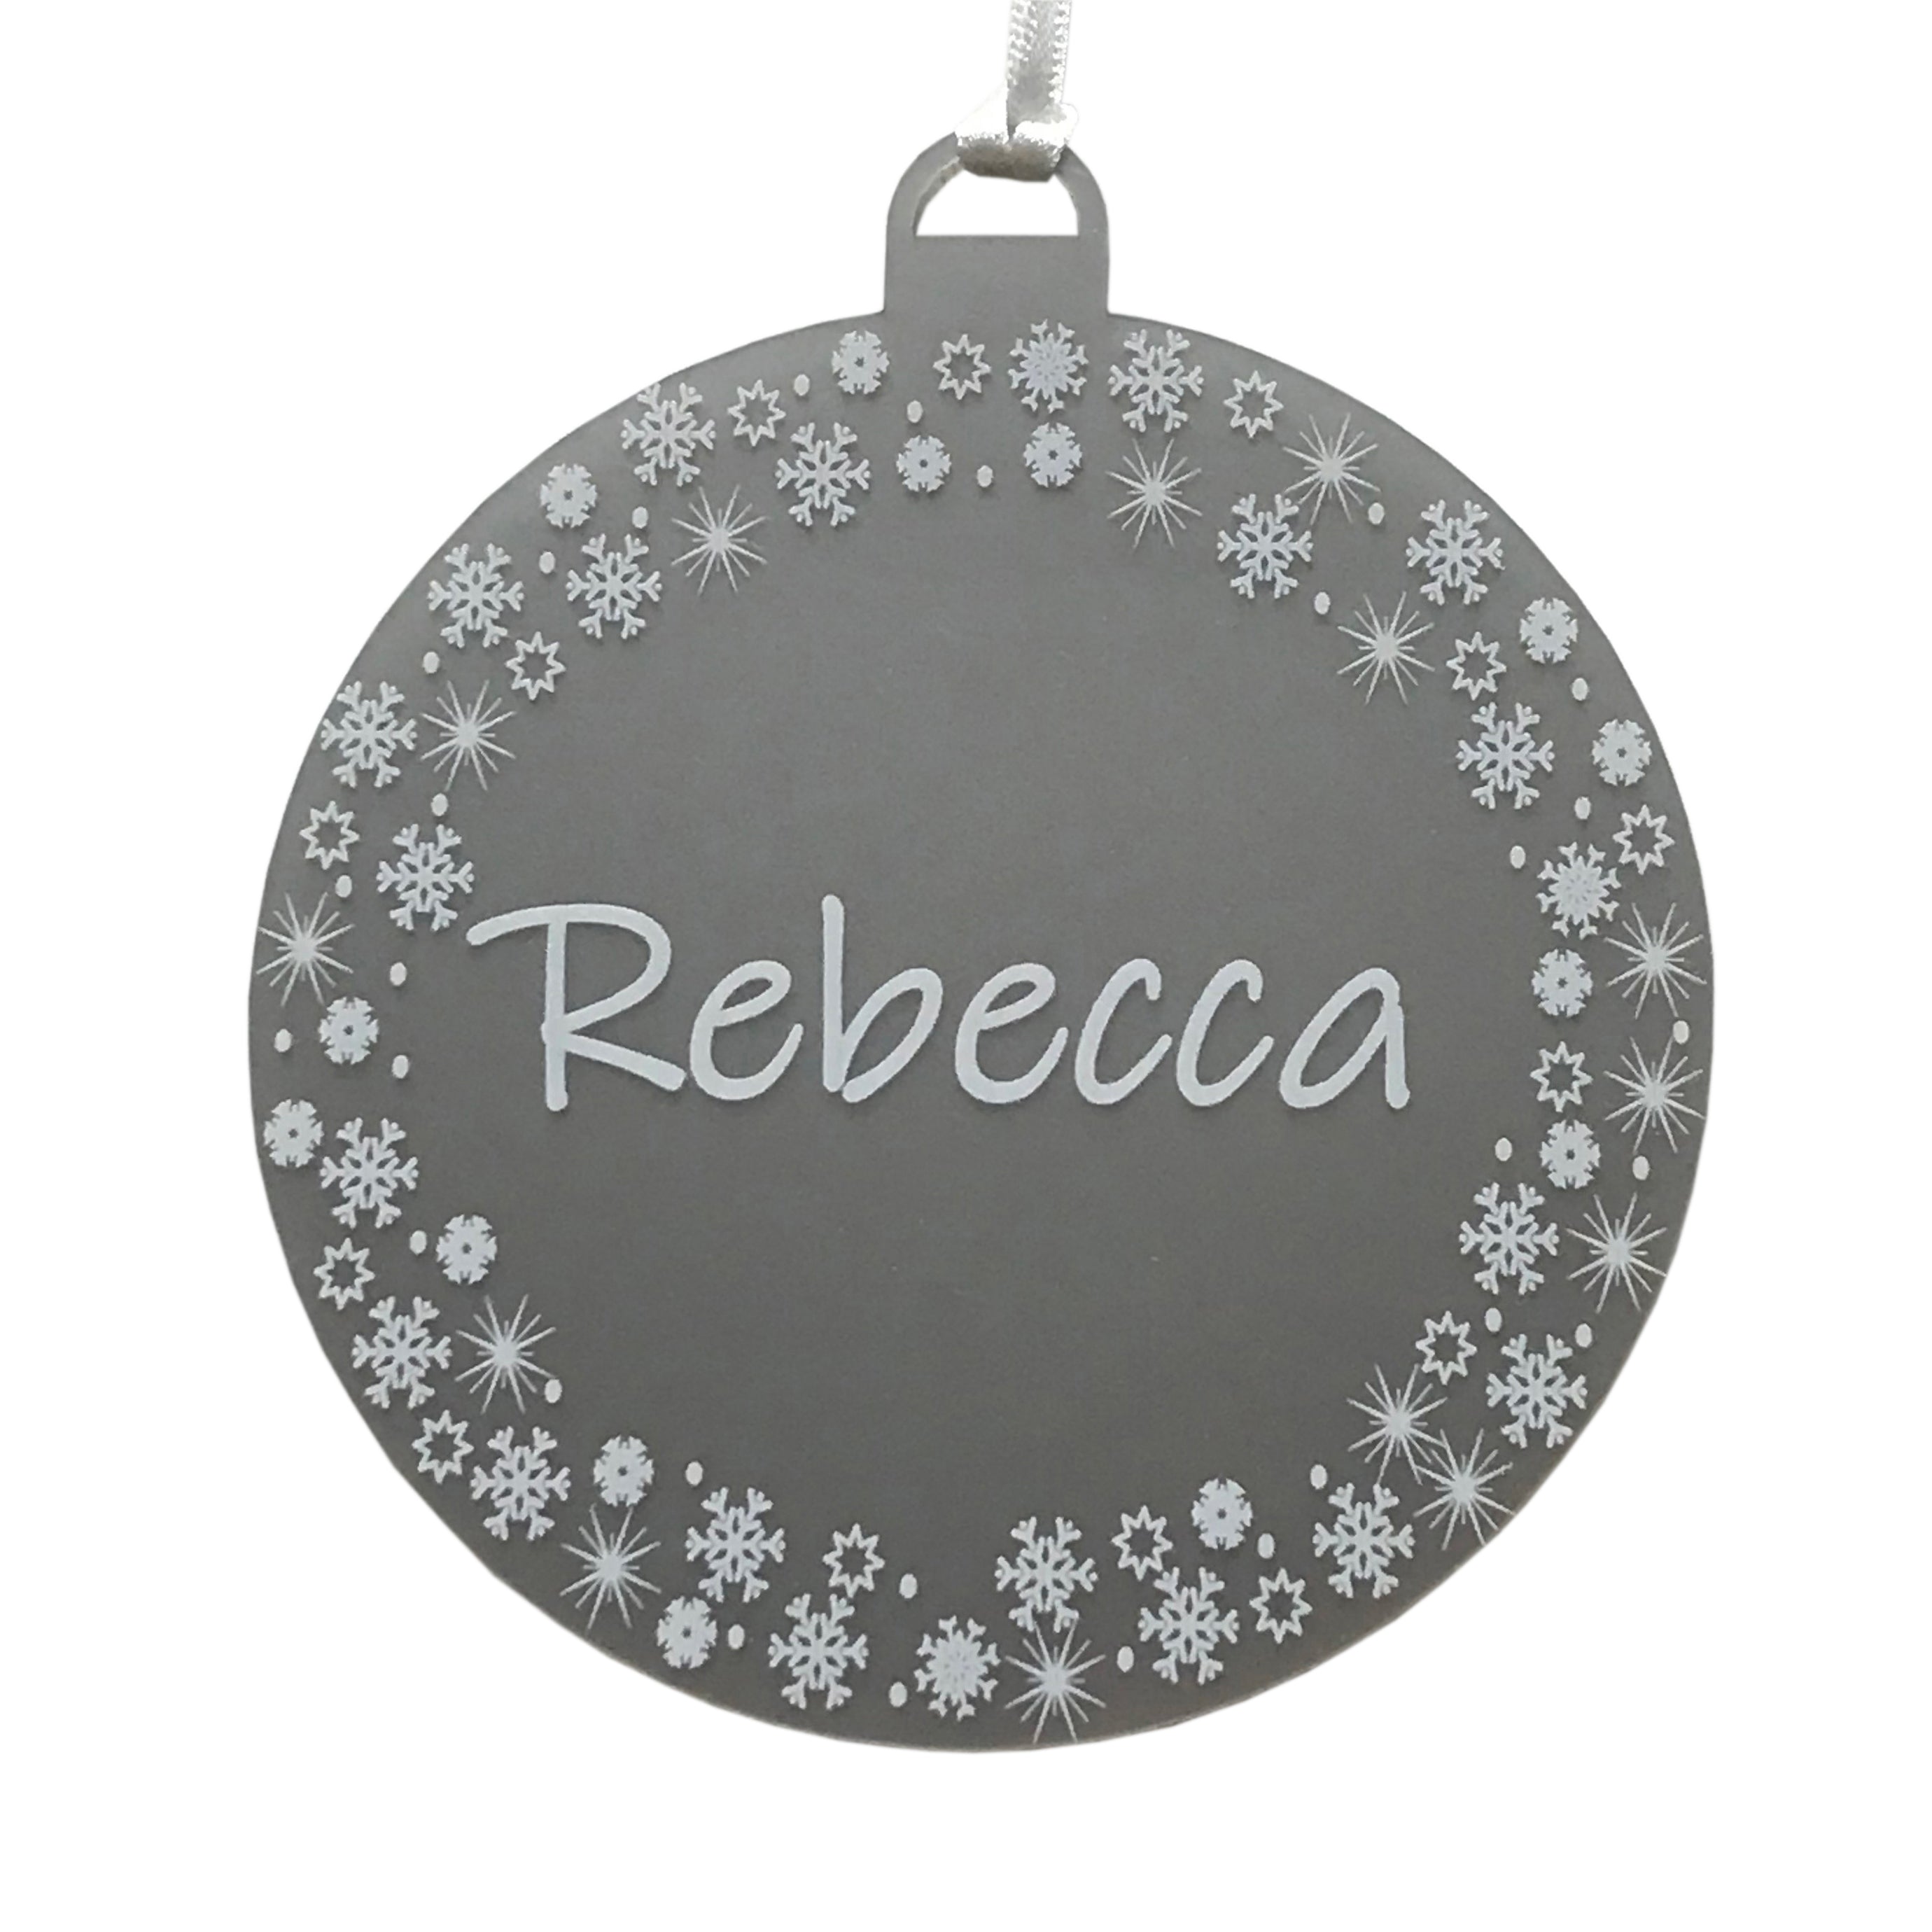 Personalised Name Christmas Bauble Snowflake Border Hanging Tree Decoration